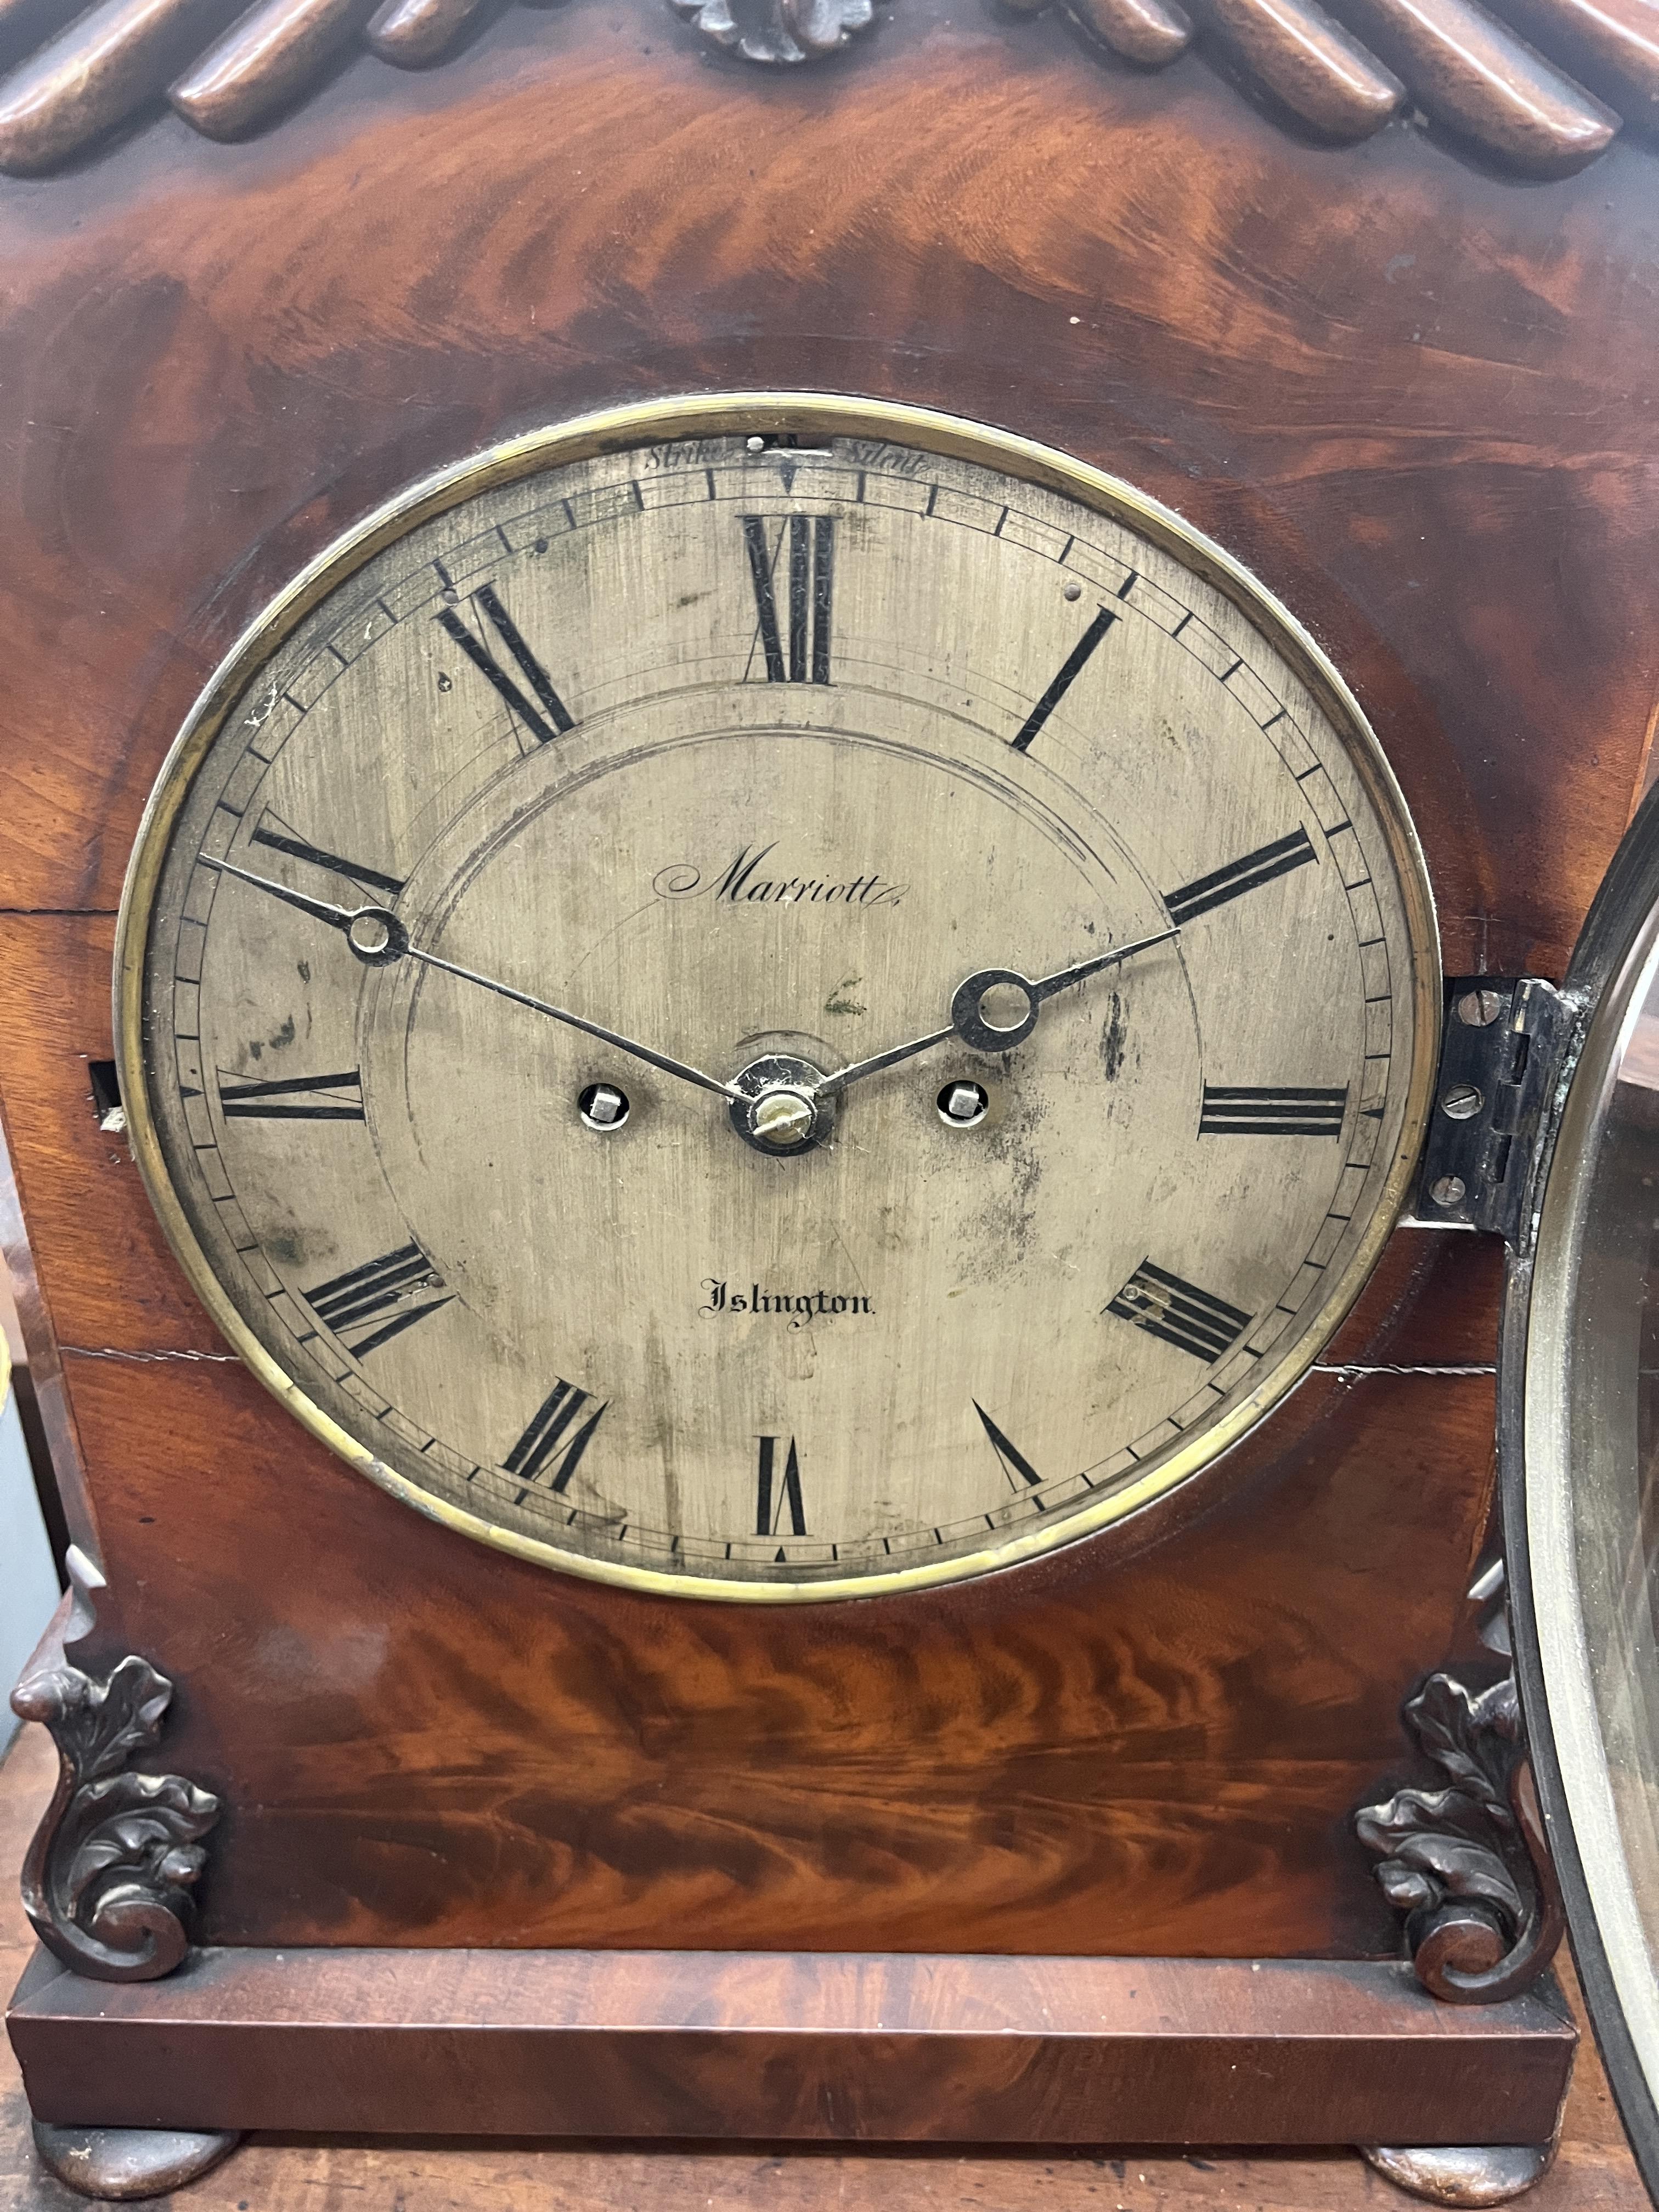 Marriot's of Islington Bracket clock circa 1860 - Approx height: 44cm - Image 2 of 5